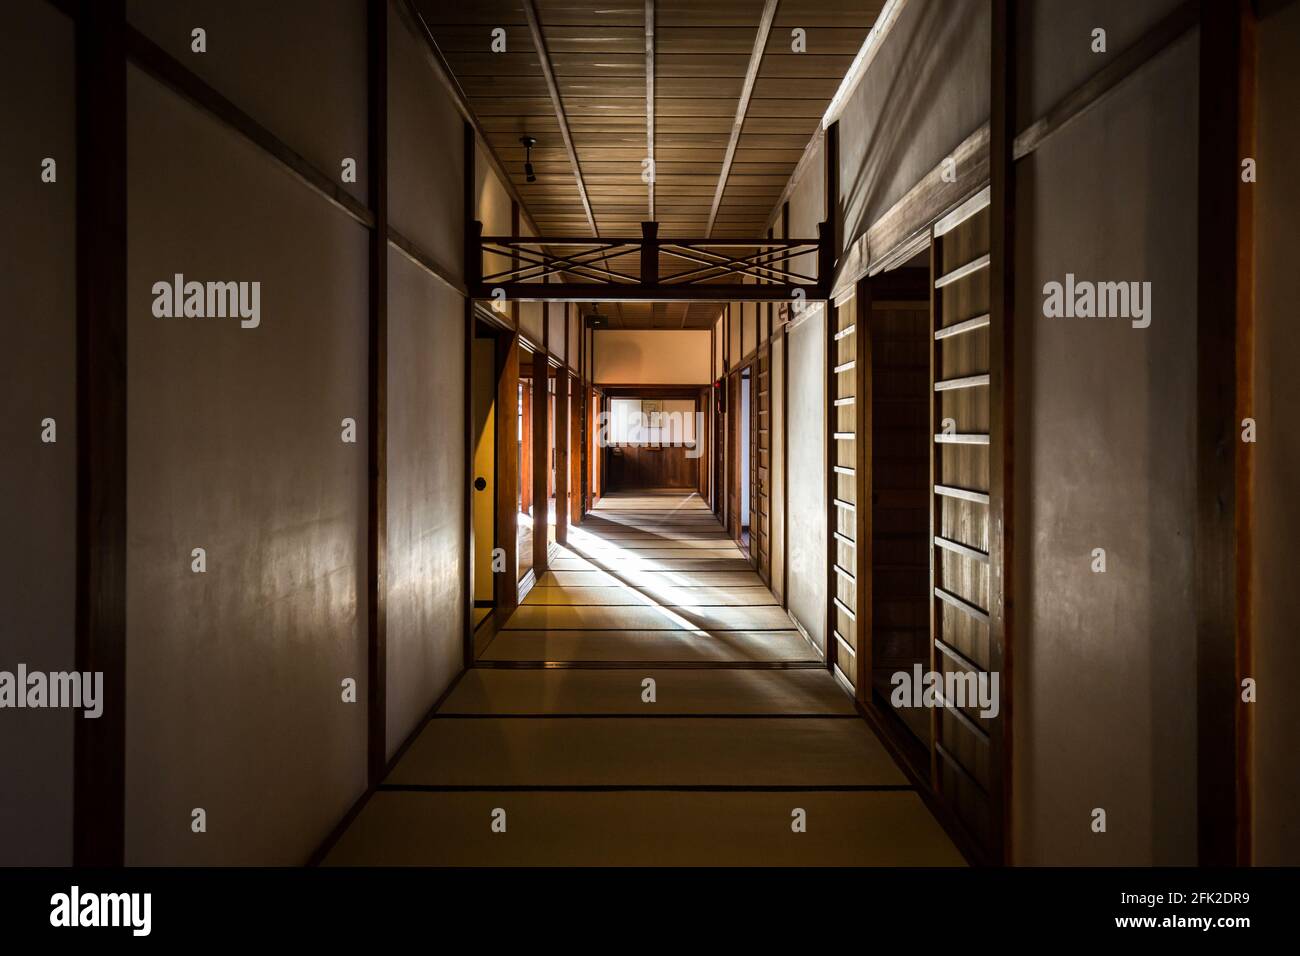 Shaft of light across dimly lit shadowy corridor with tatami mat flooring within old Japanese samurai building. Stock Photo